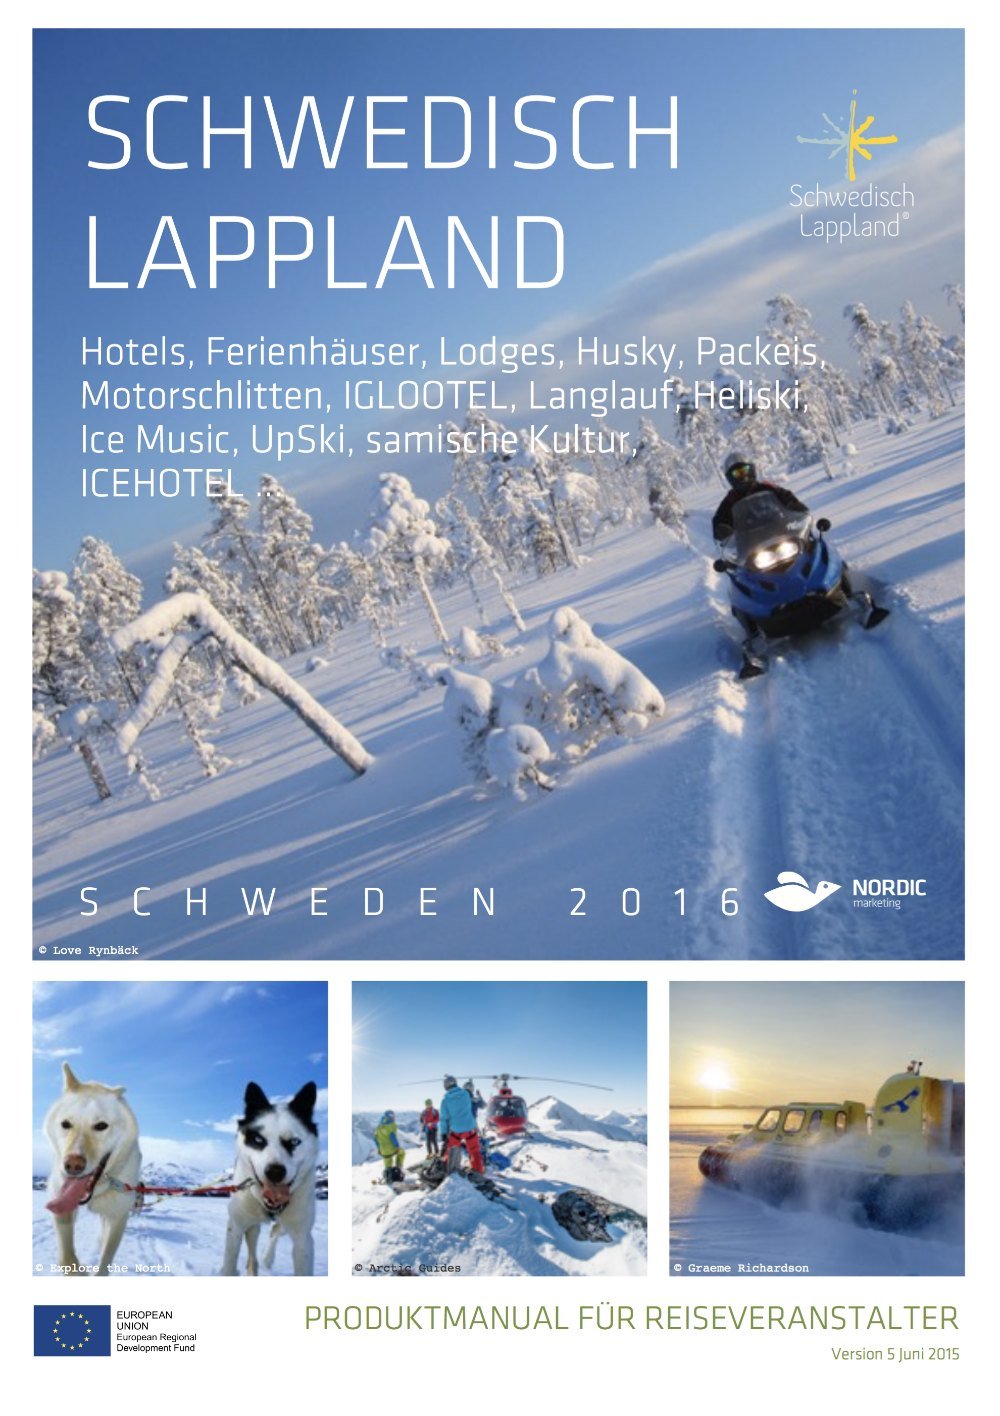 Schwedisch Lappland Winter Produktmanual Cover